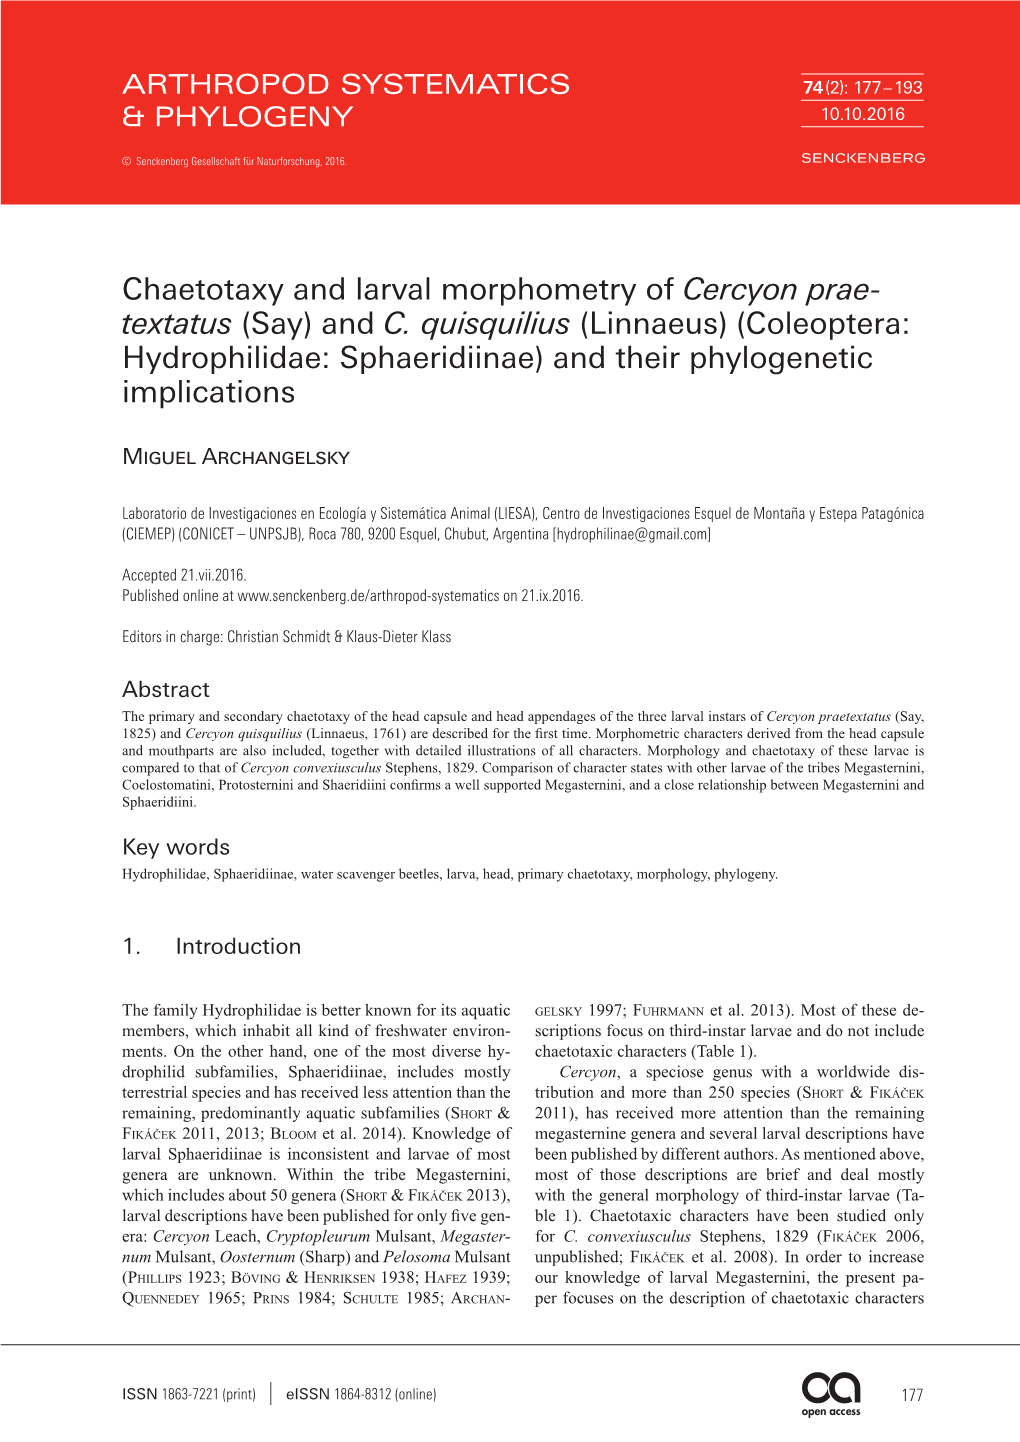 Chaetotaxy and Larval Morphometry of Cercyon Praetextatus